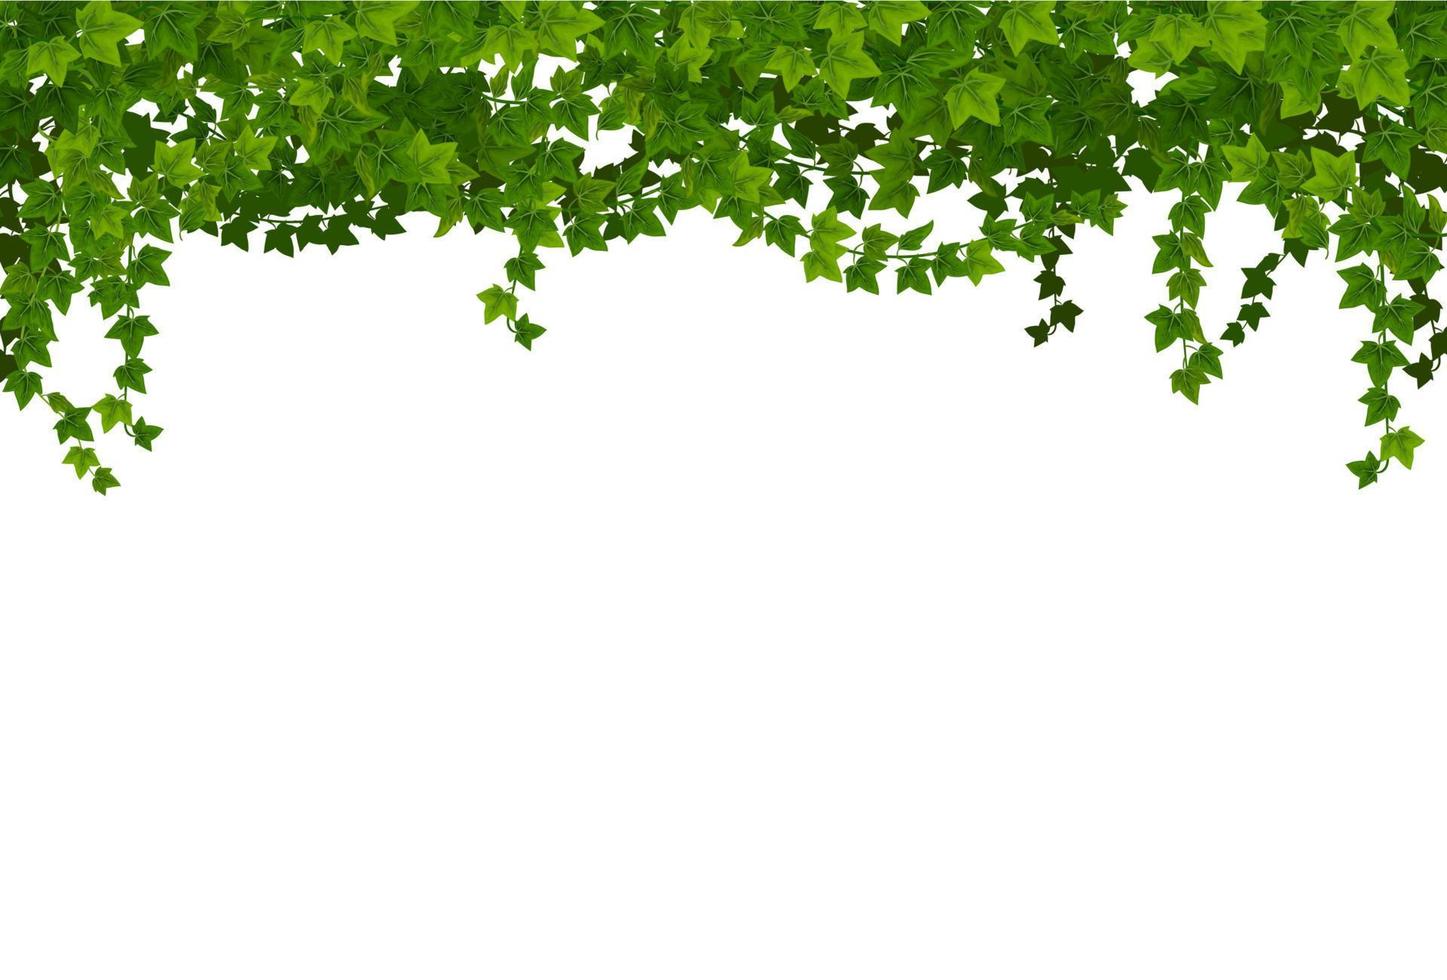 grön murgröna lianas med löv vektor gräns linje